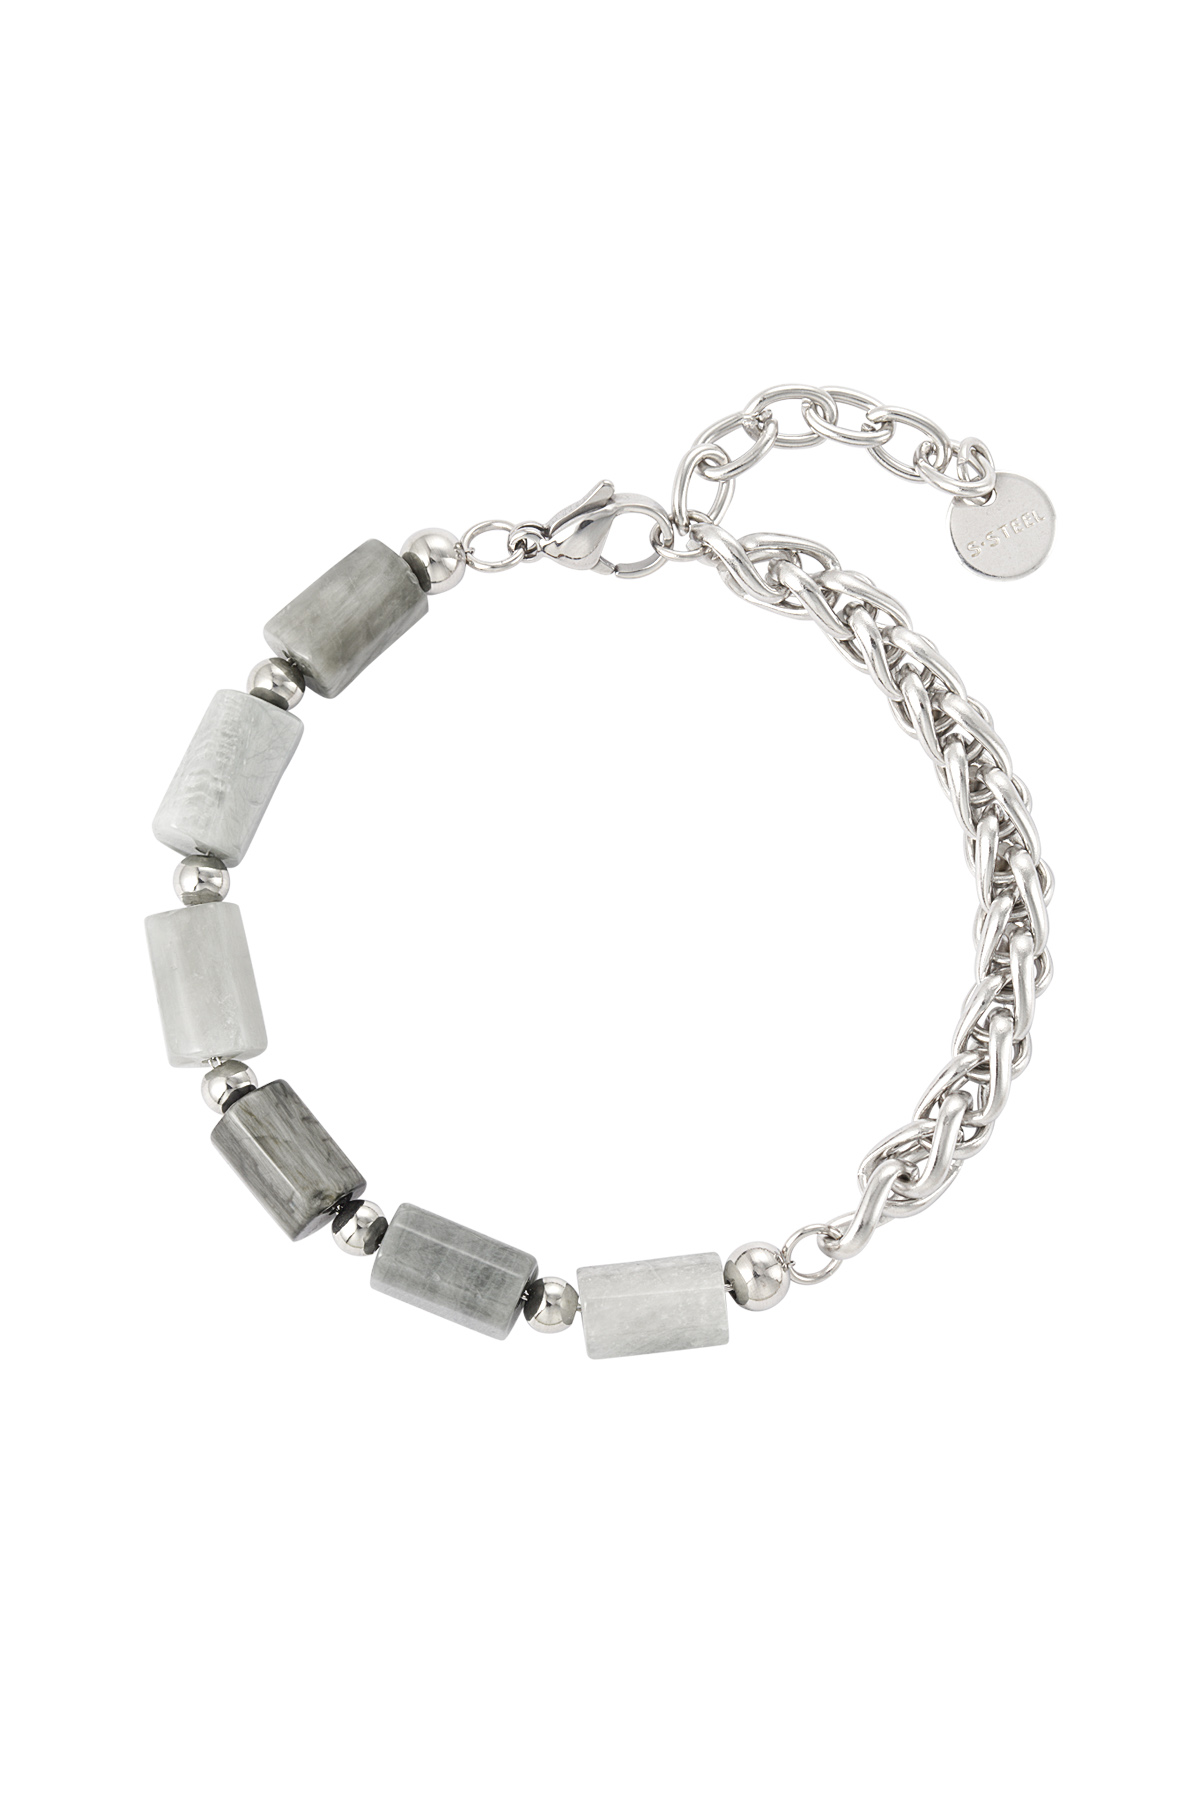 Half chained half charms bracelet - dark gray h5 